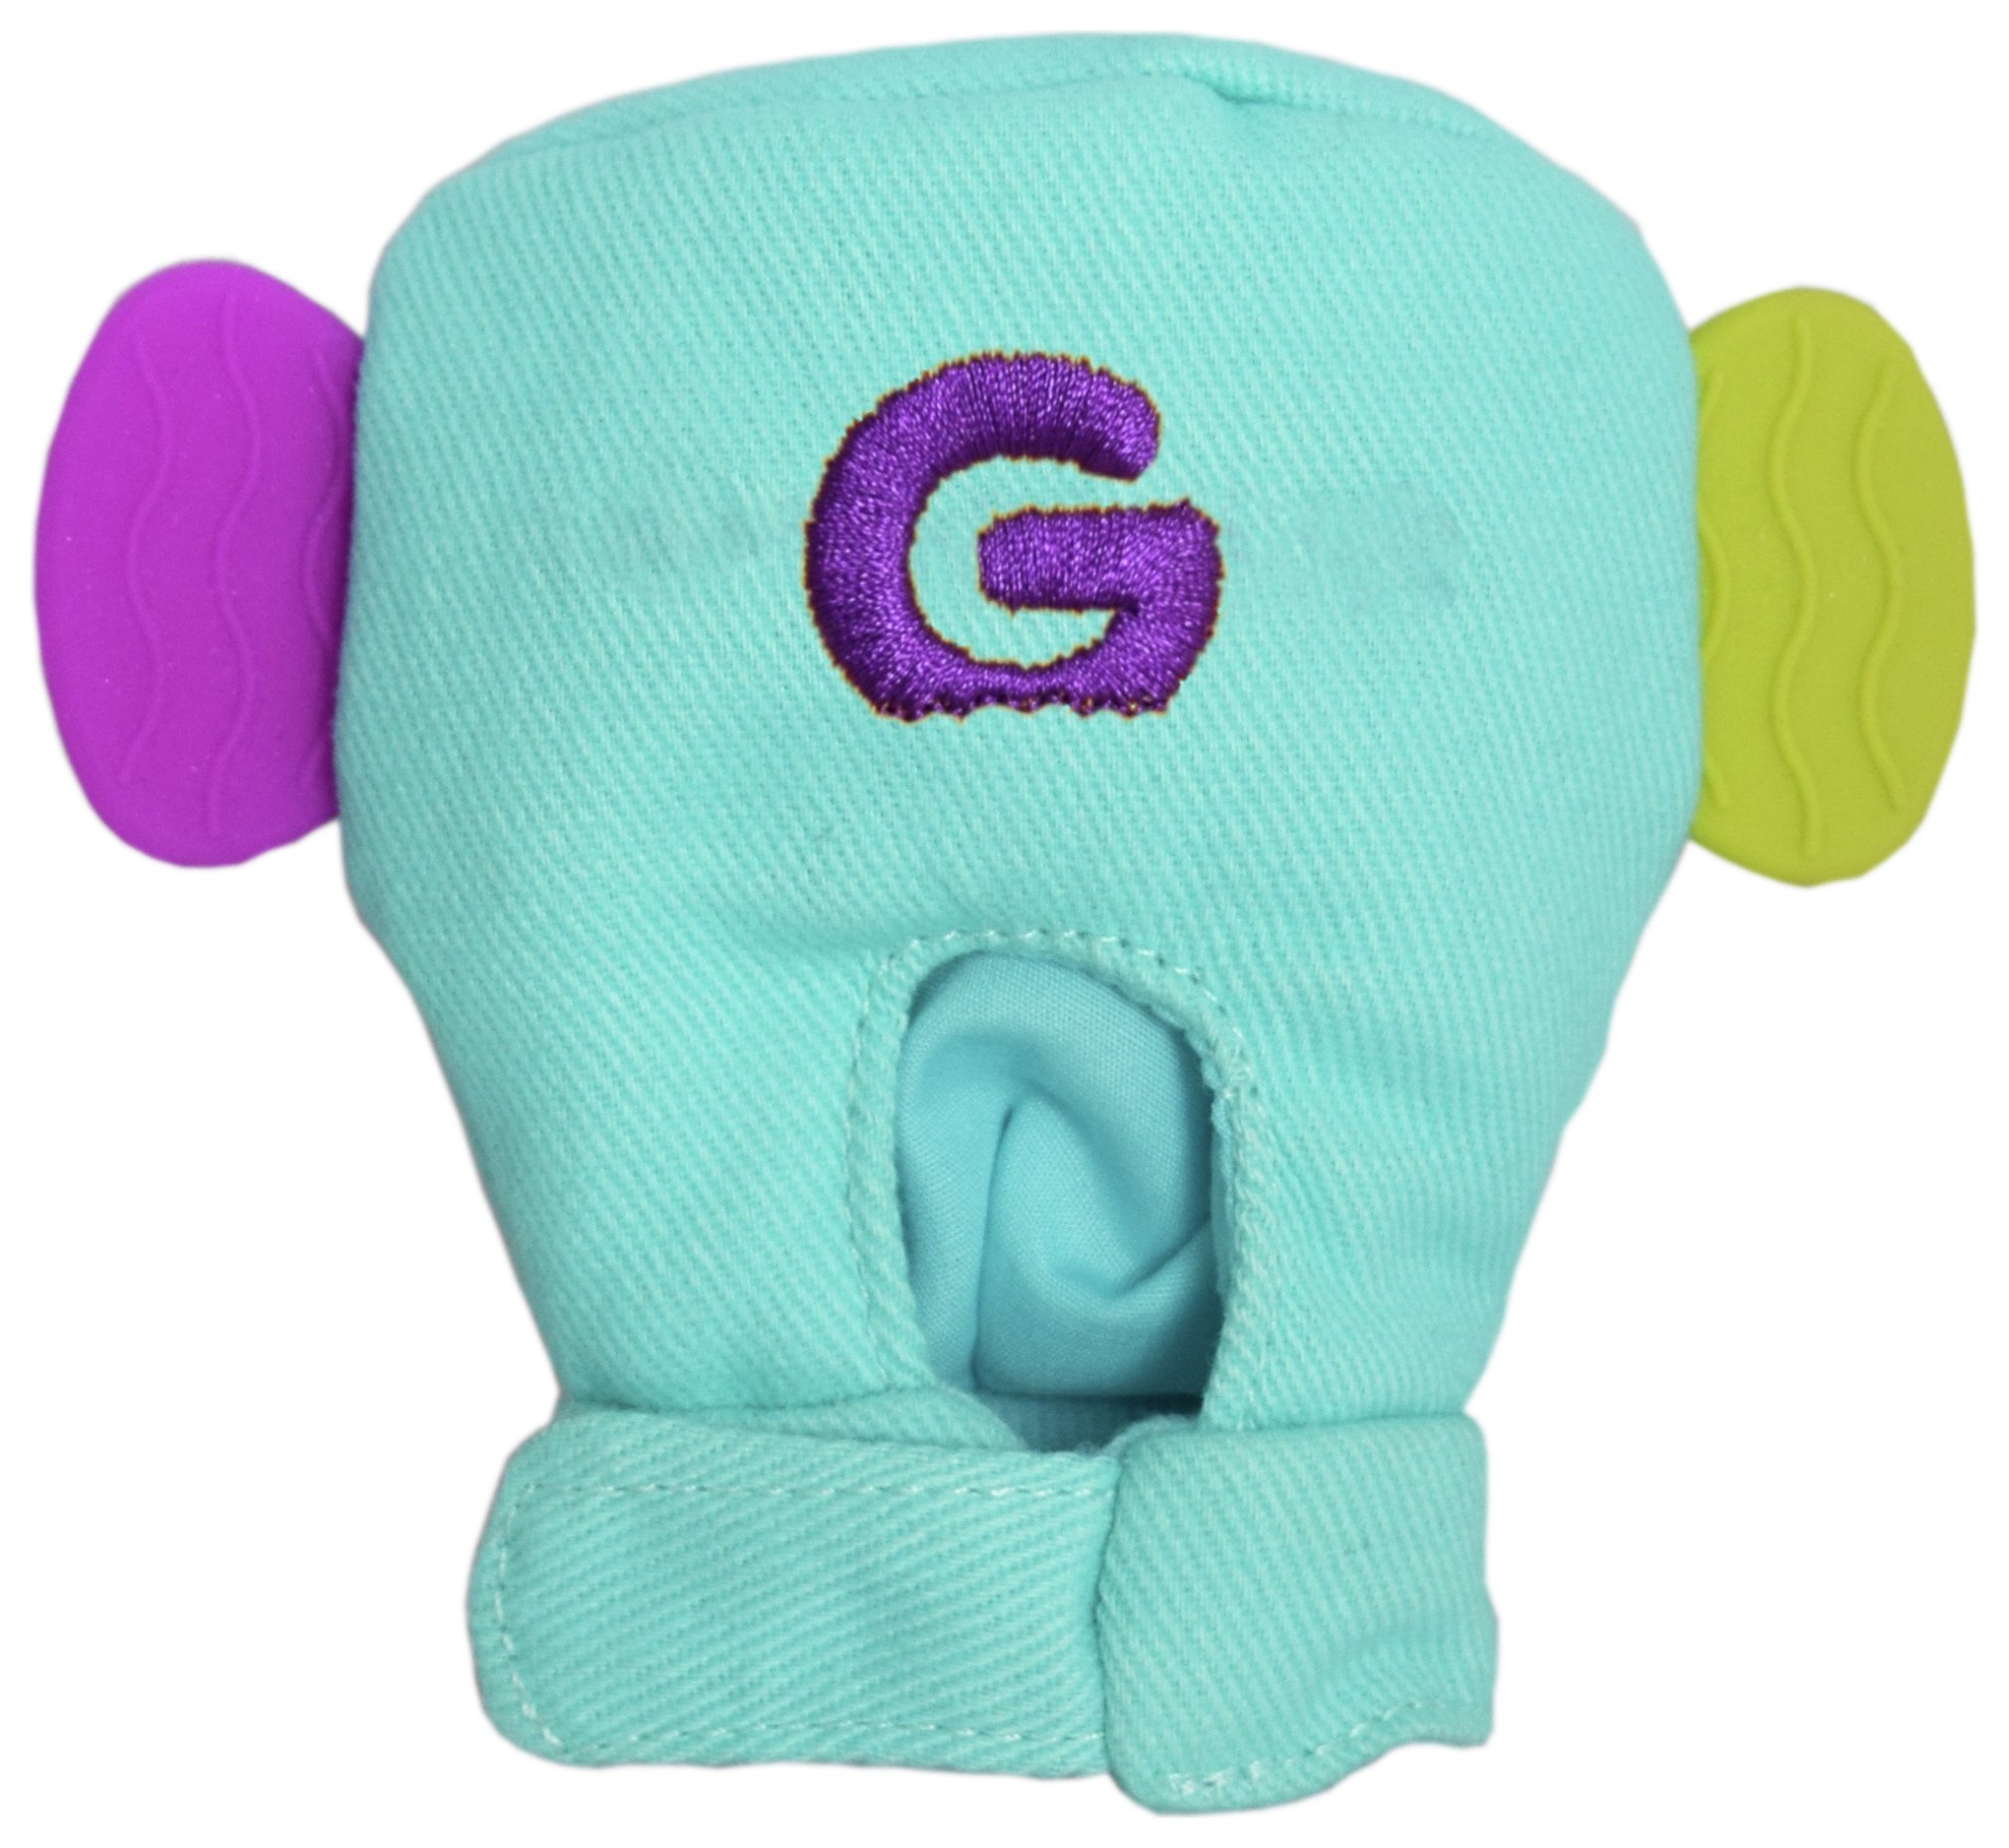 Gummee Glove Teething Mitten Review